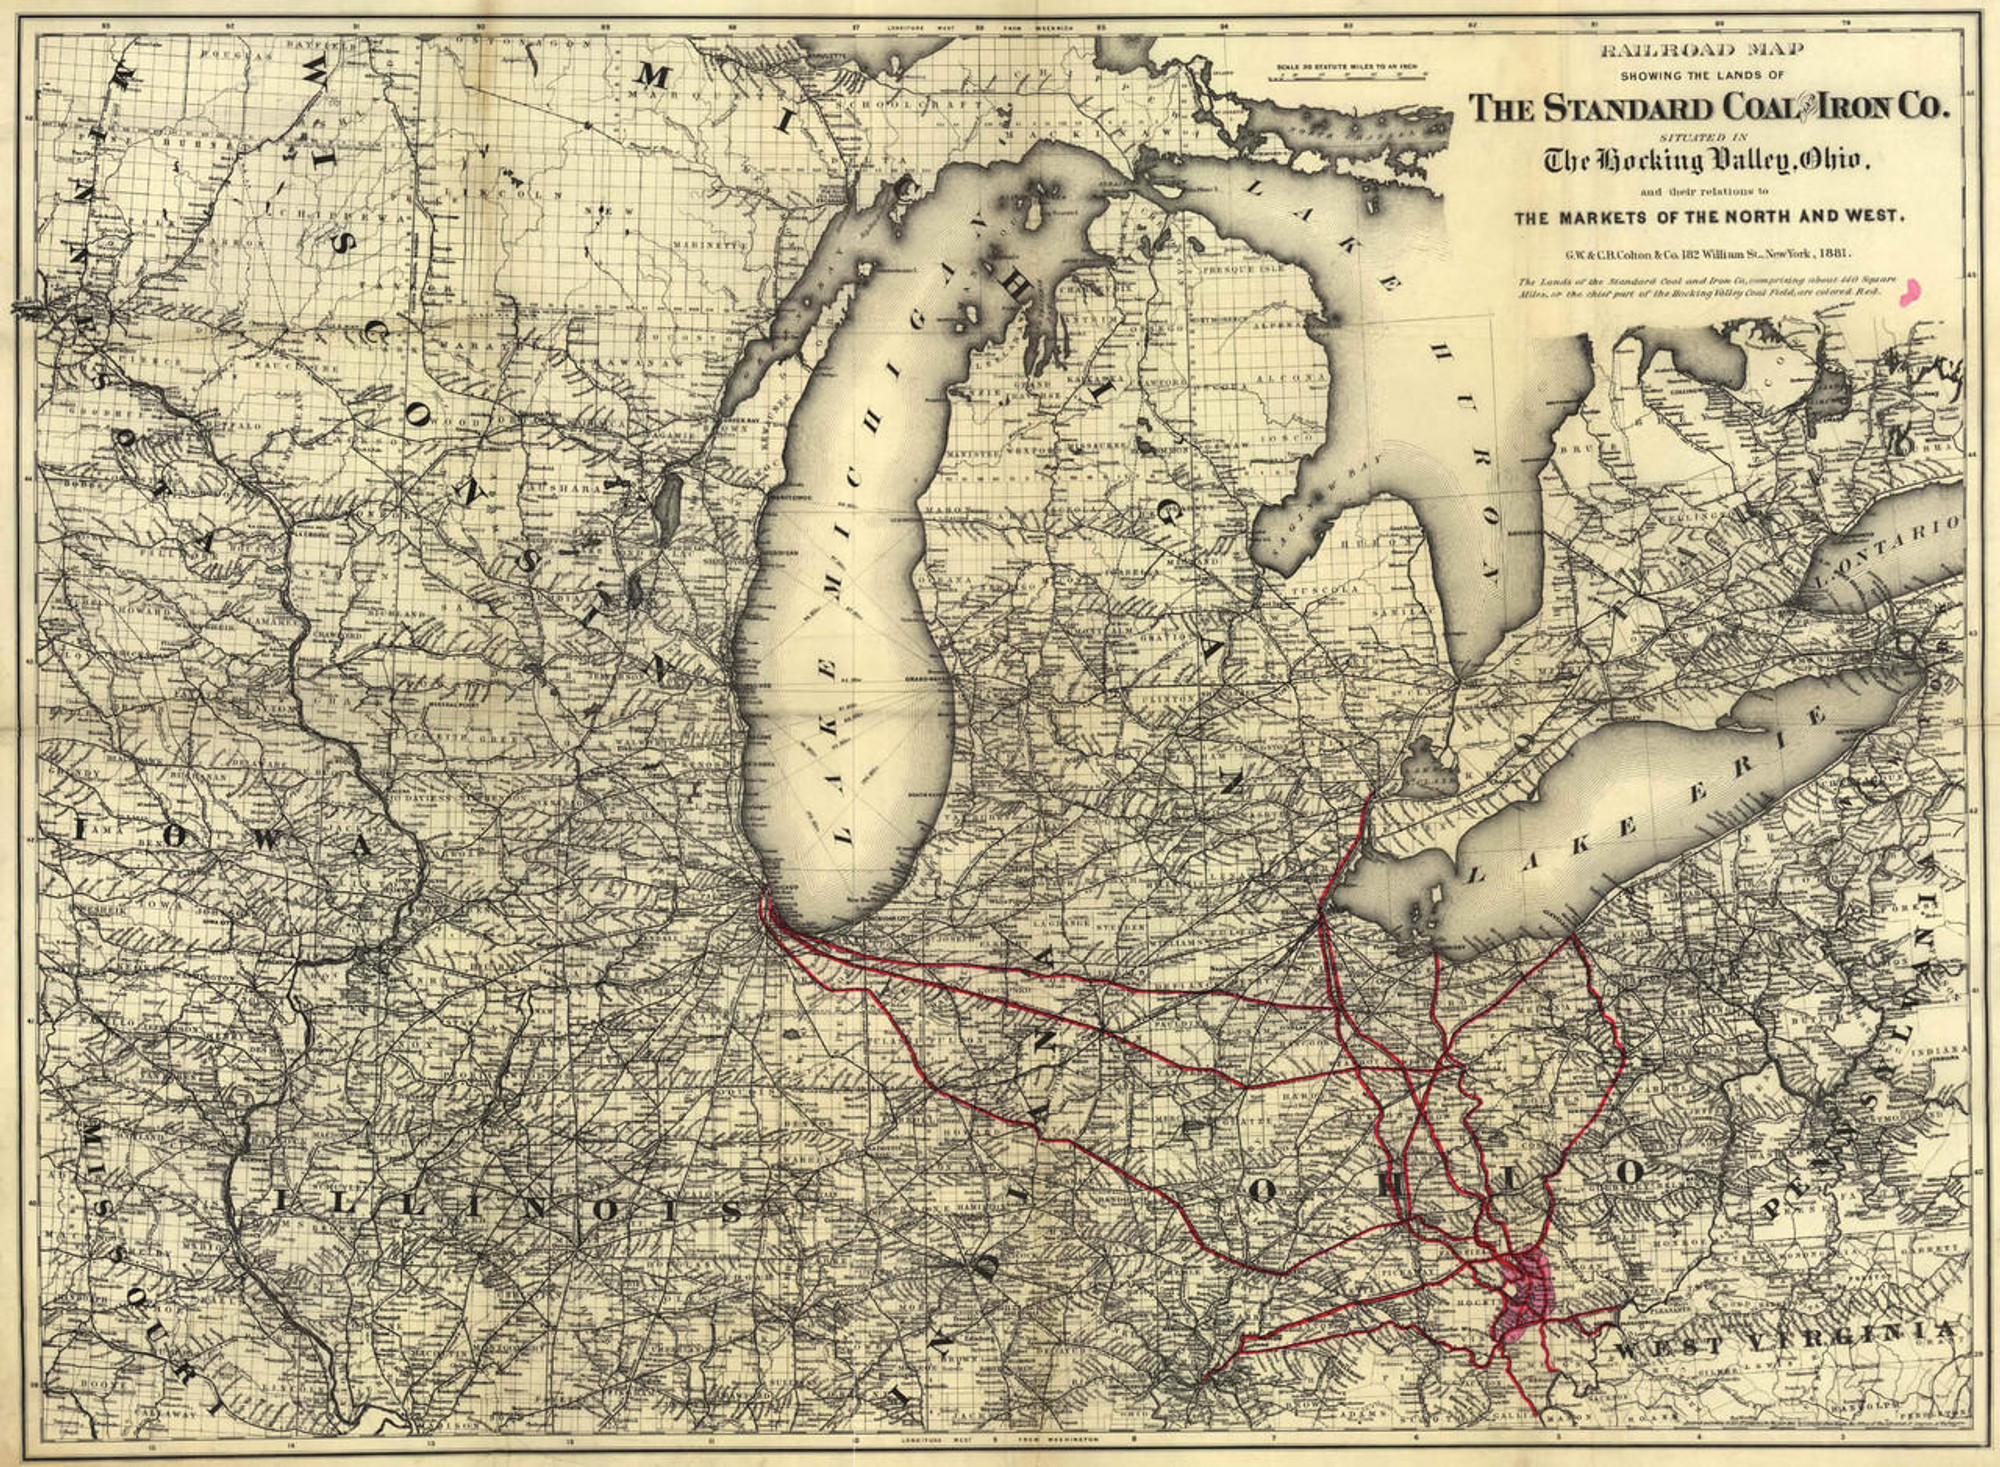 Historic Railroad Map of Ohio - 1881, image 1, World Maps Online